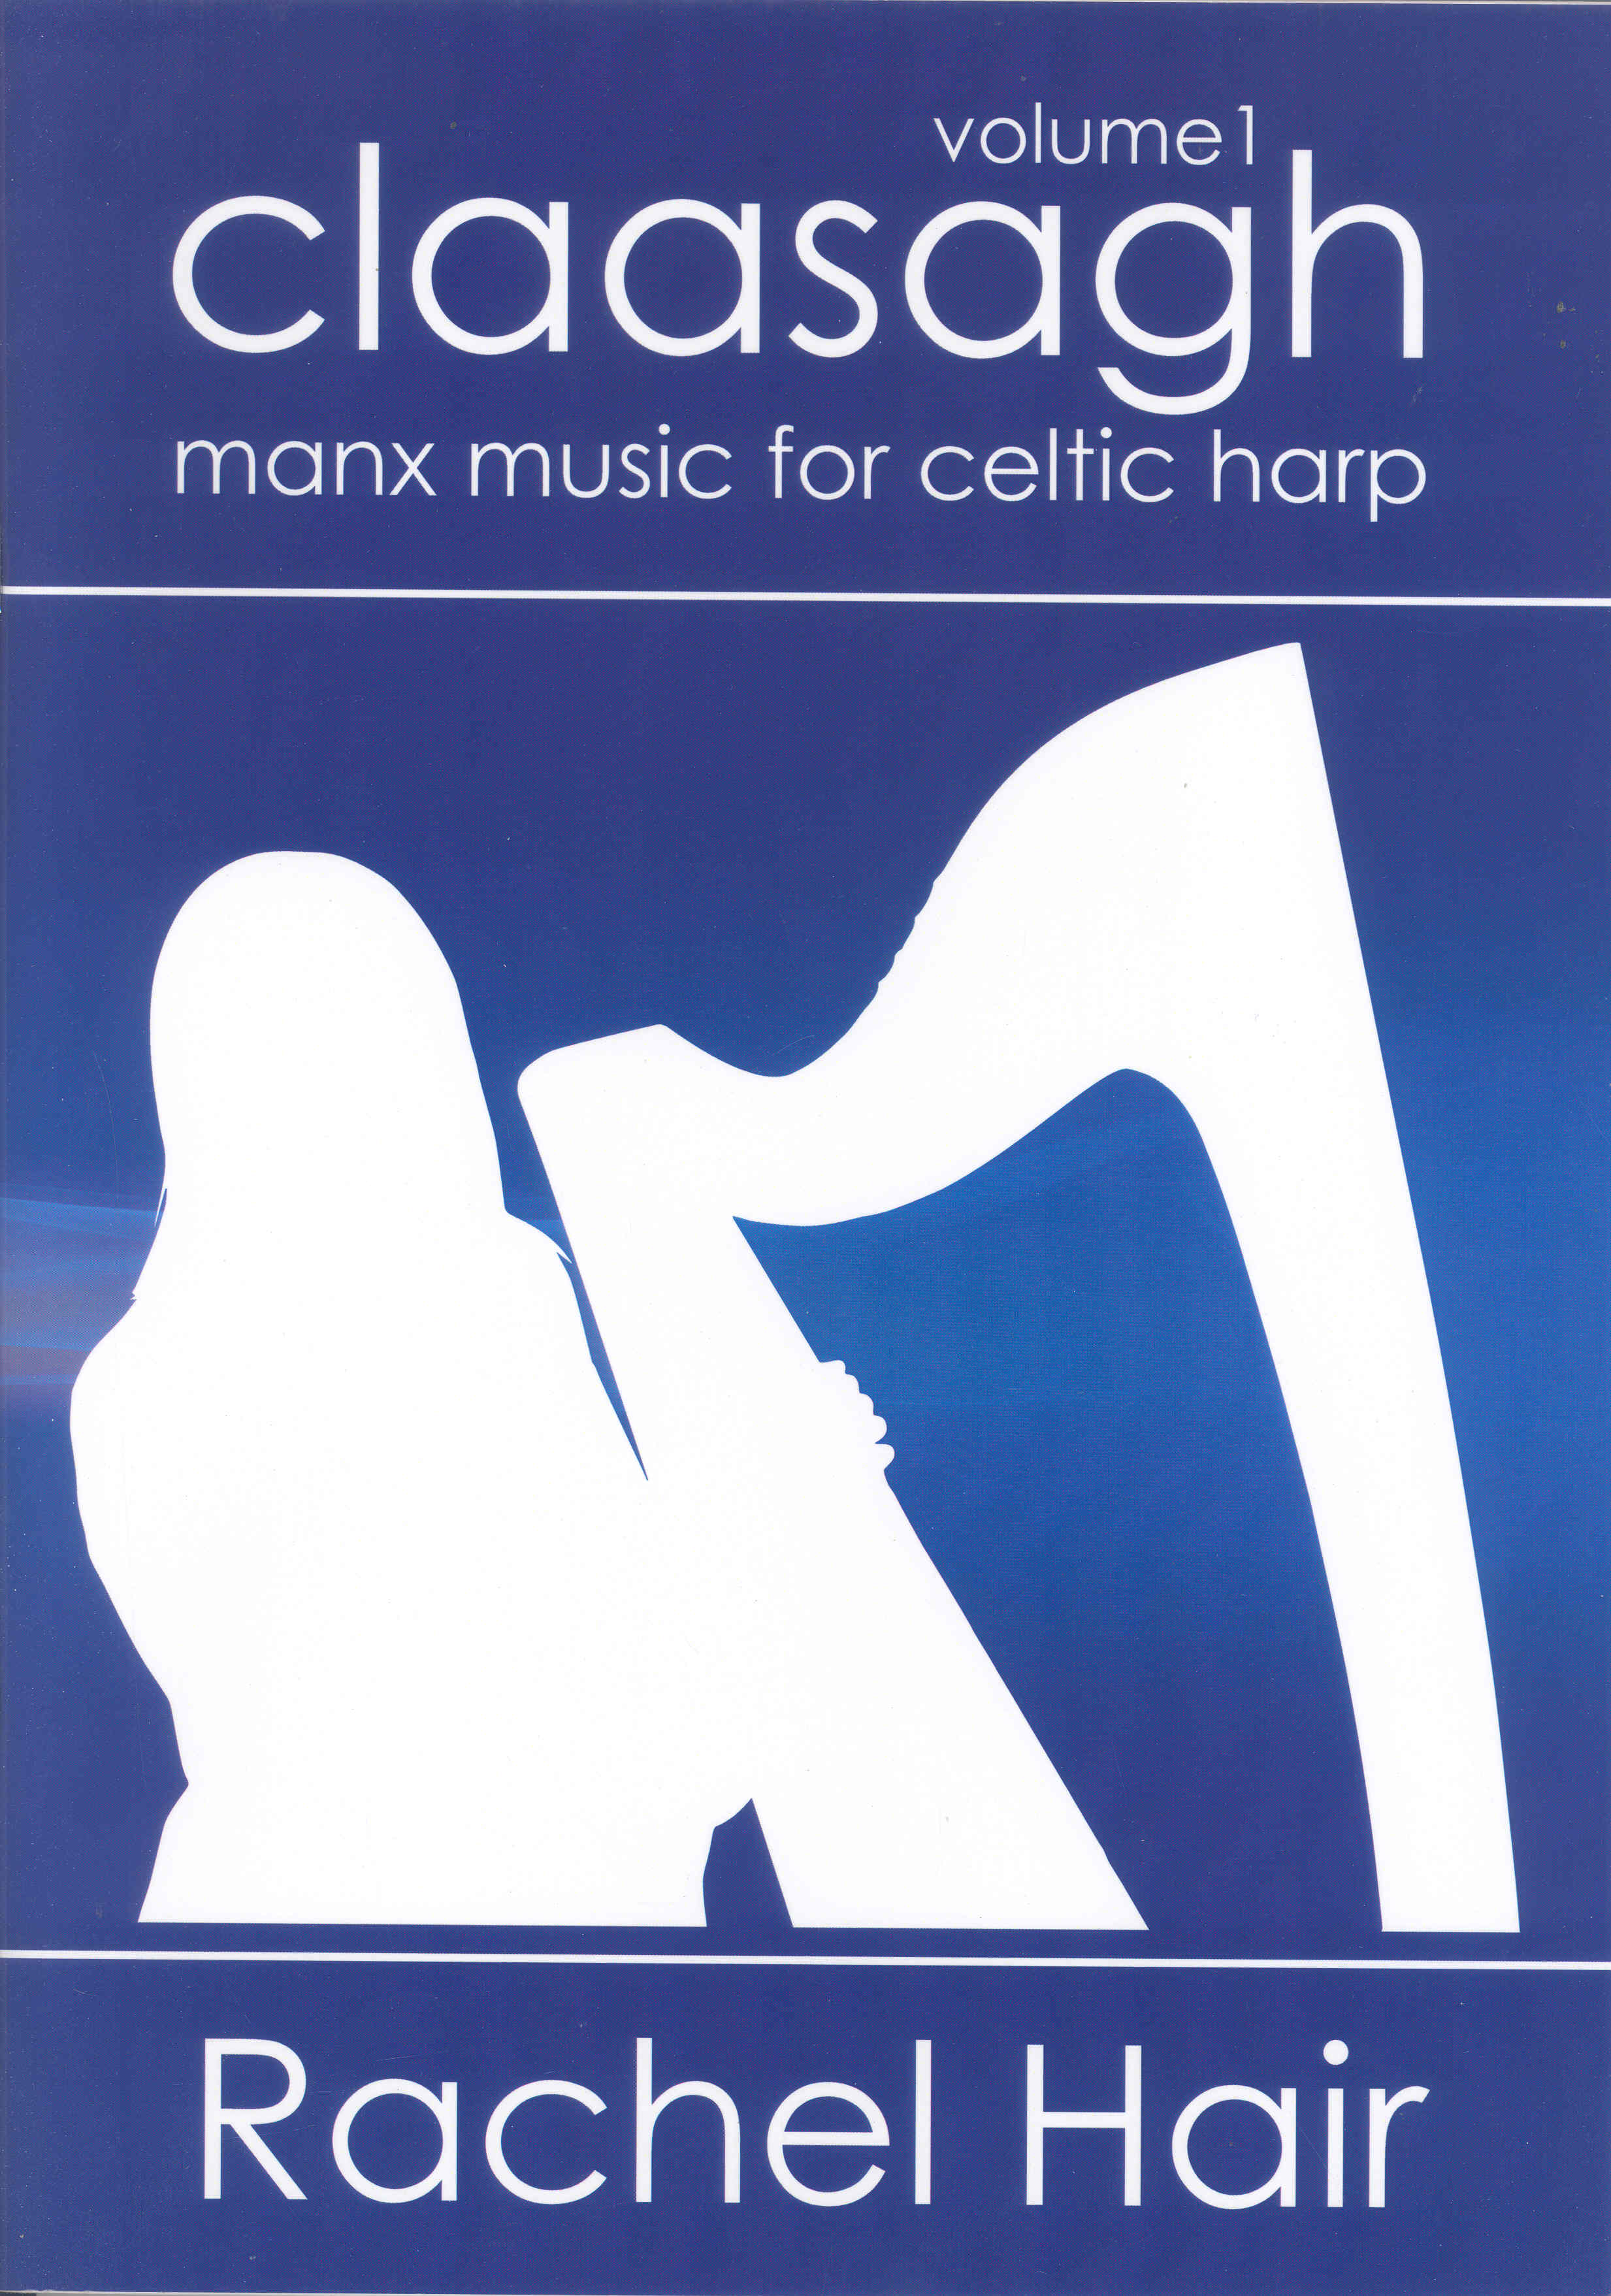 Claasagh Vol 1 Hair Manx Music For Celtic Harp Sheet Music Songbook